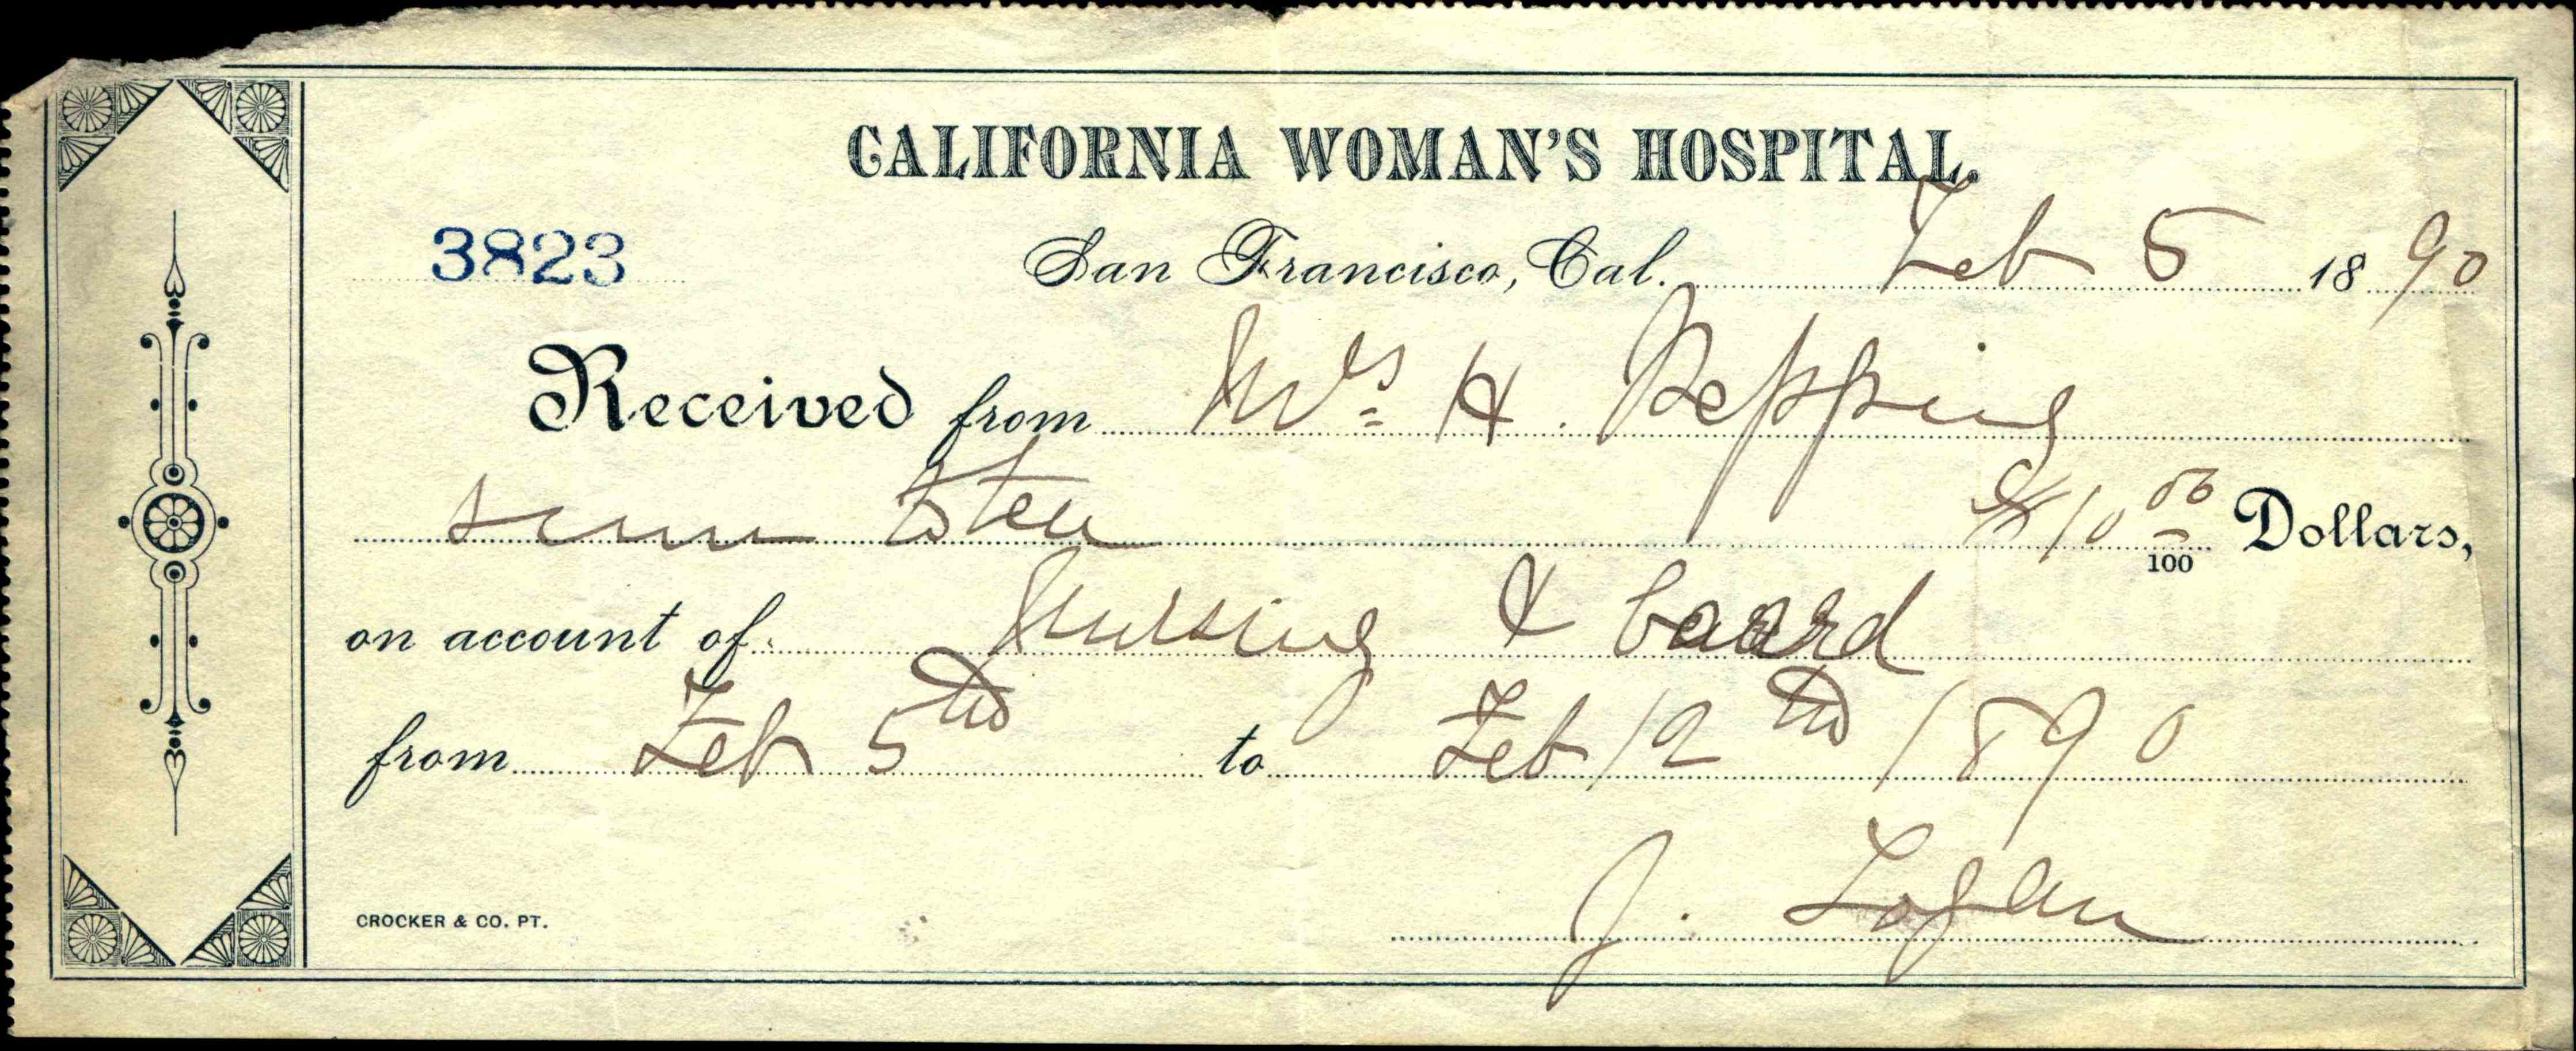 Receipt for woman's hospital